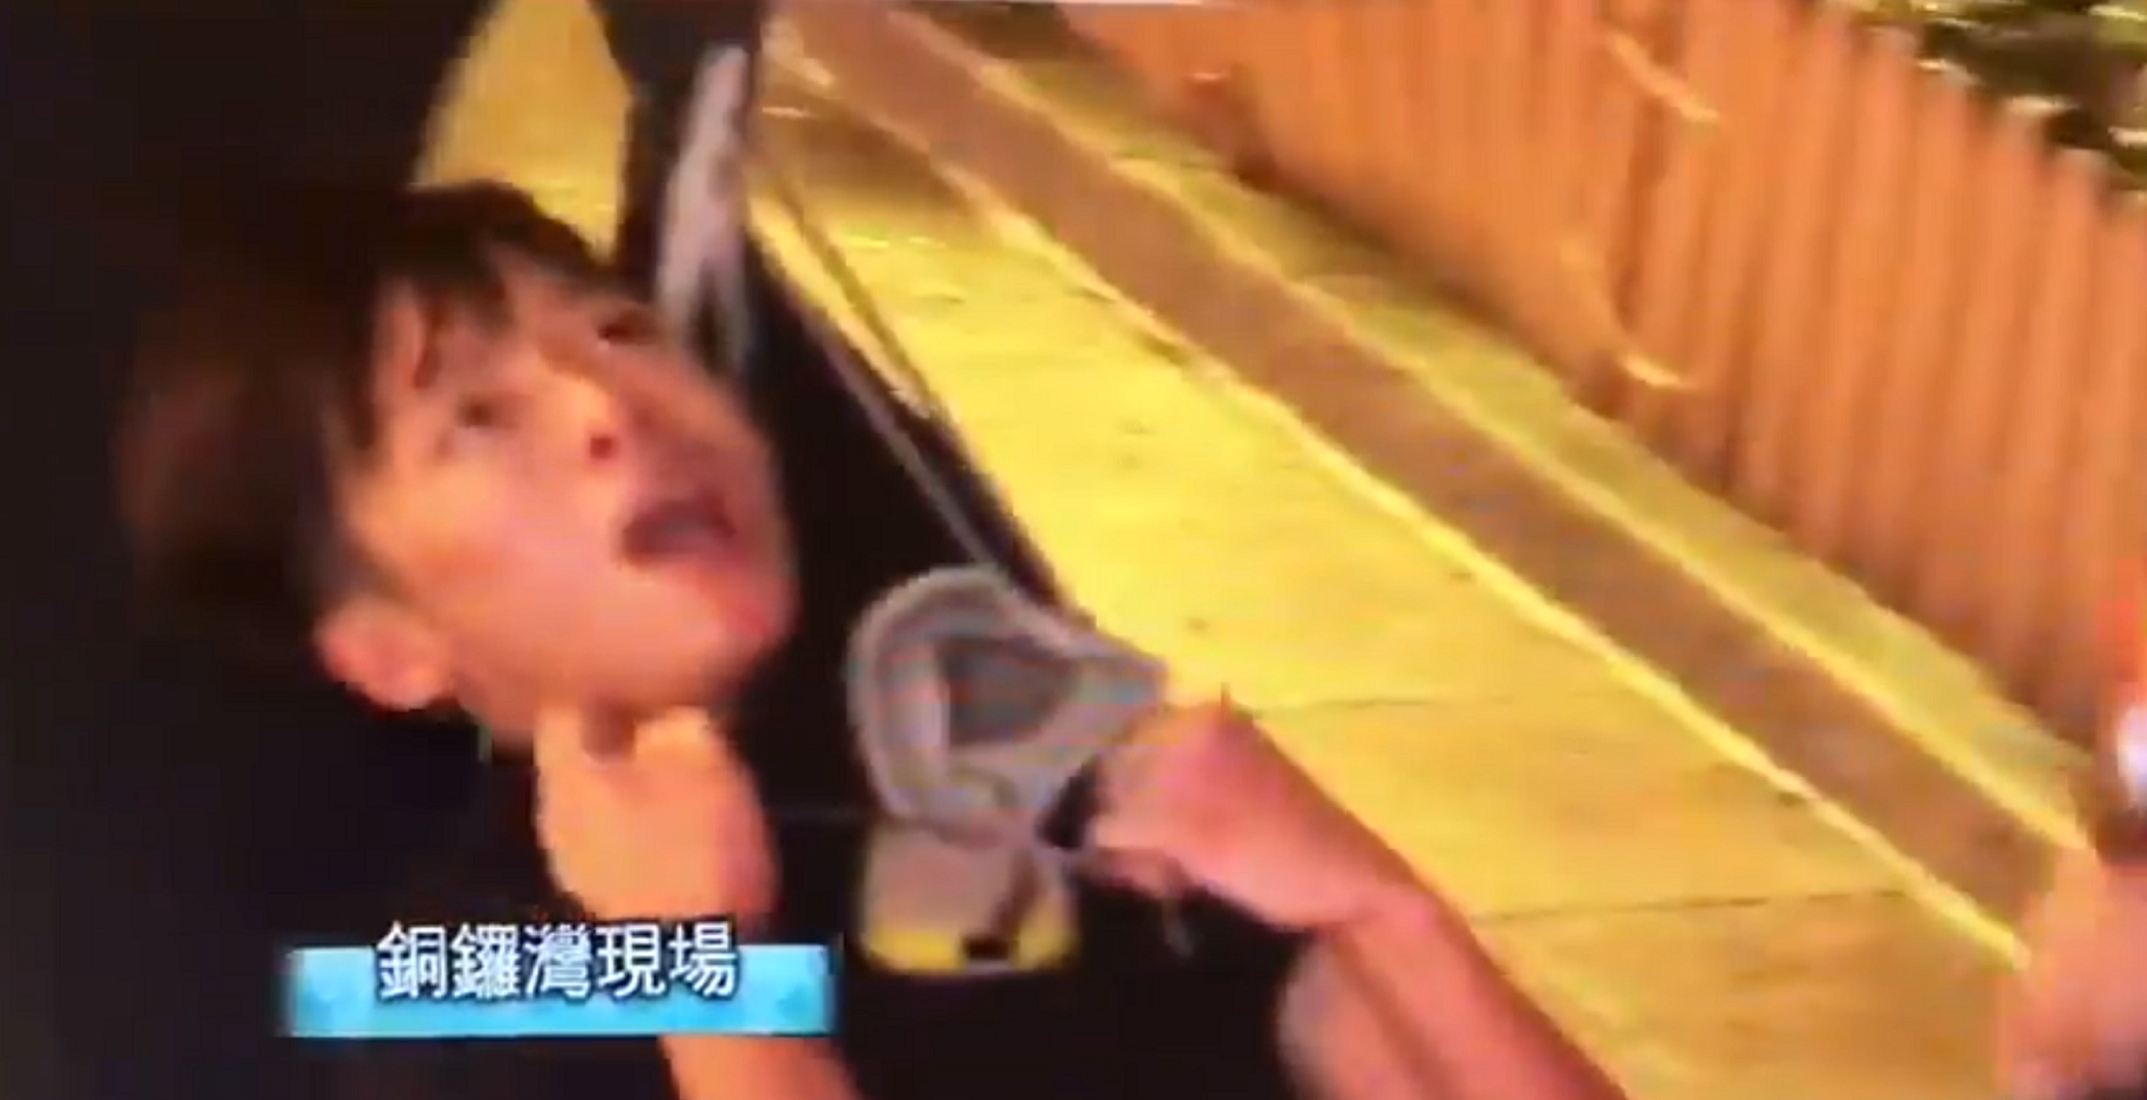 VÍDEO | Cargas policiales dentro del metro en Hong Kong